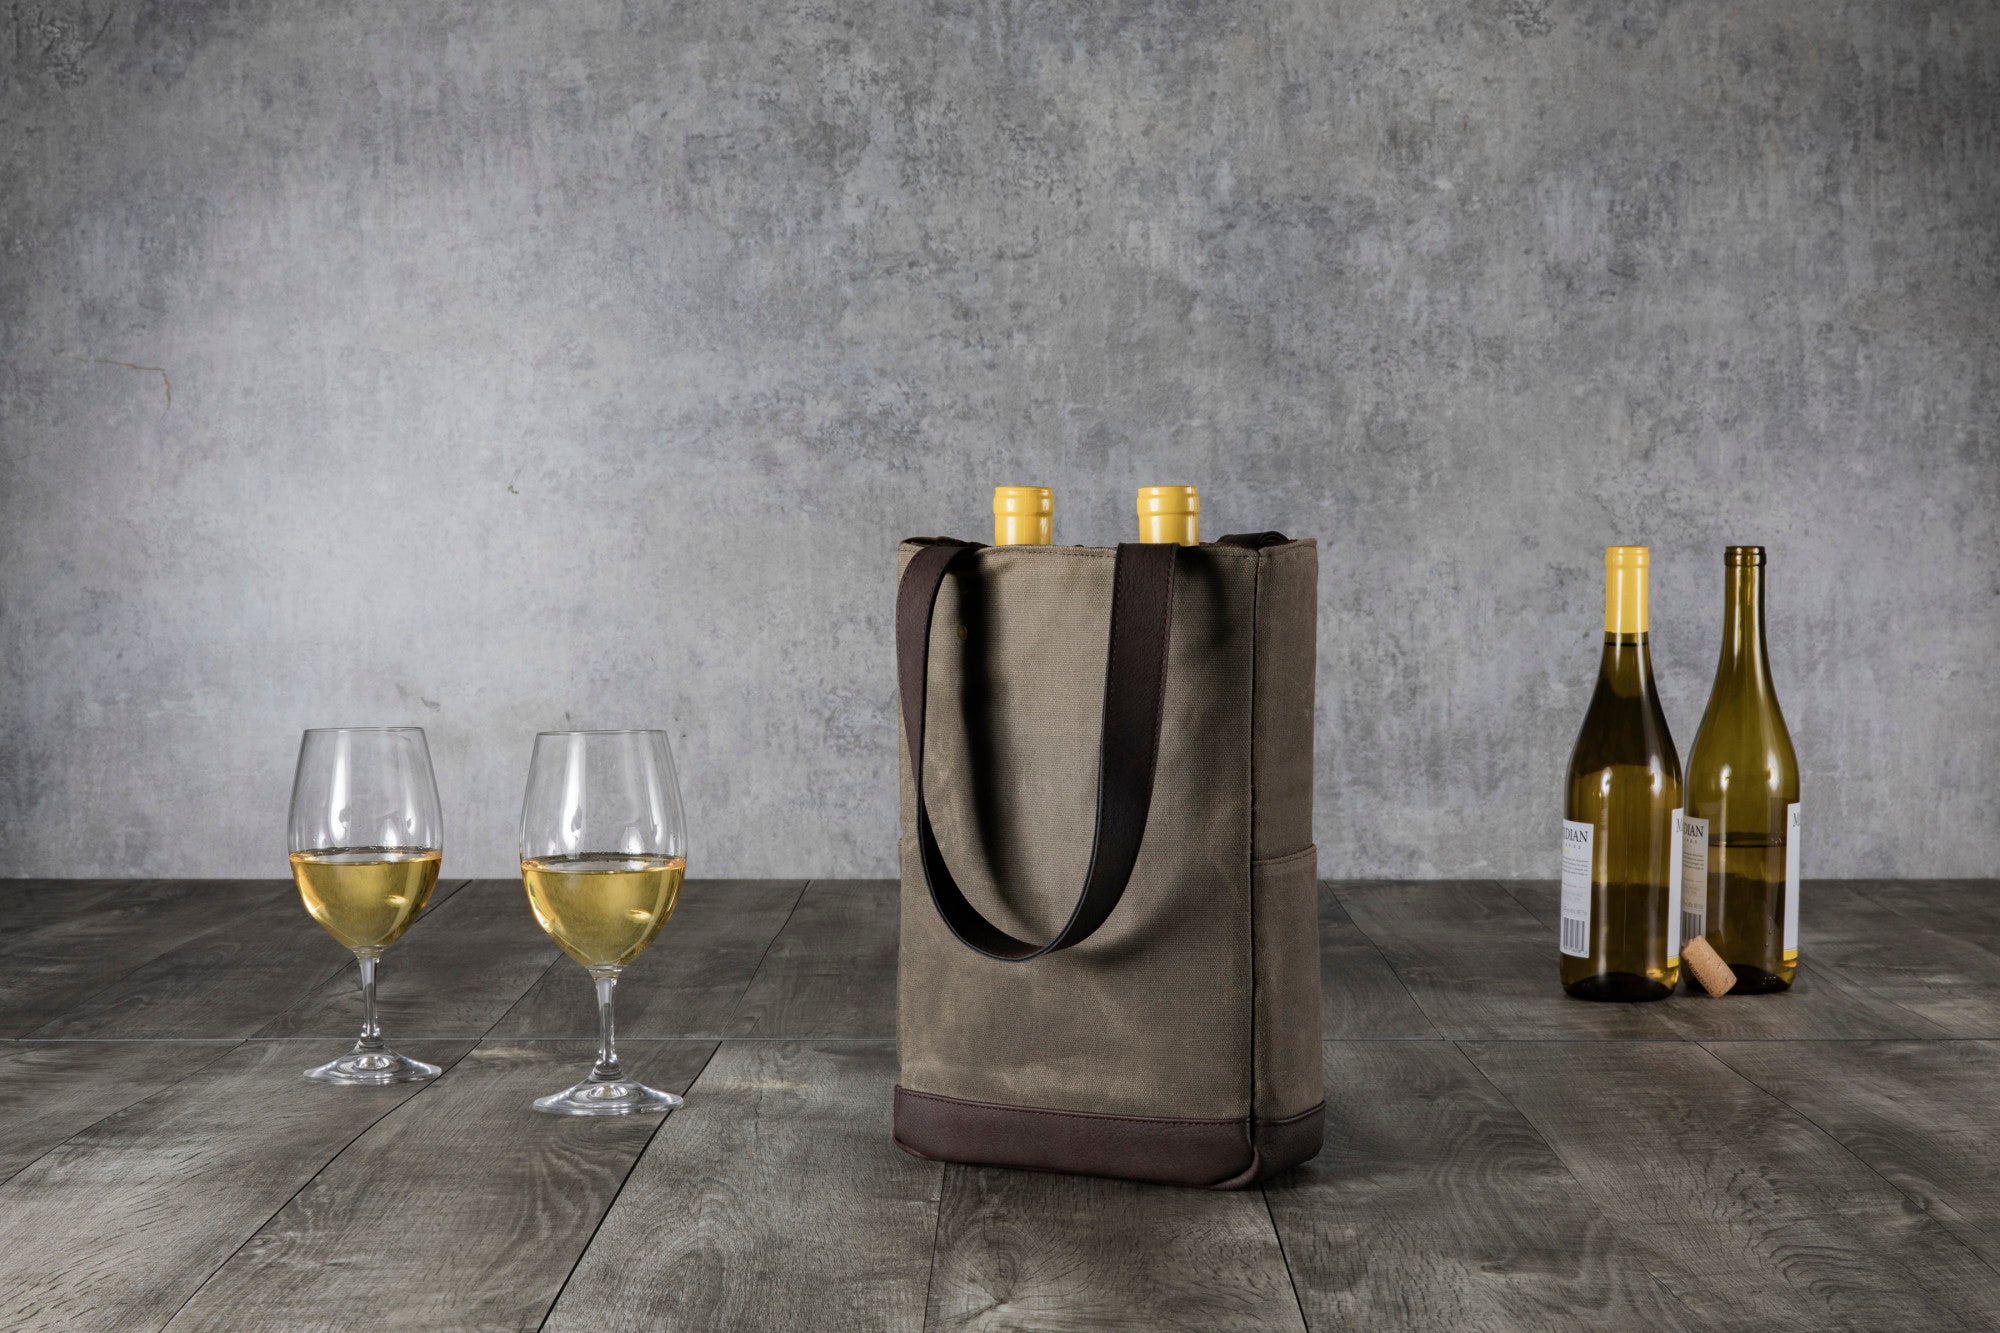 New York Jets - 2 Bottle Insulated Wine Cooler Bag